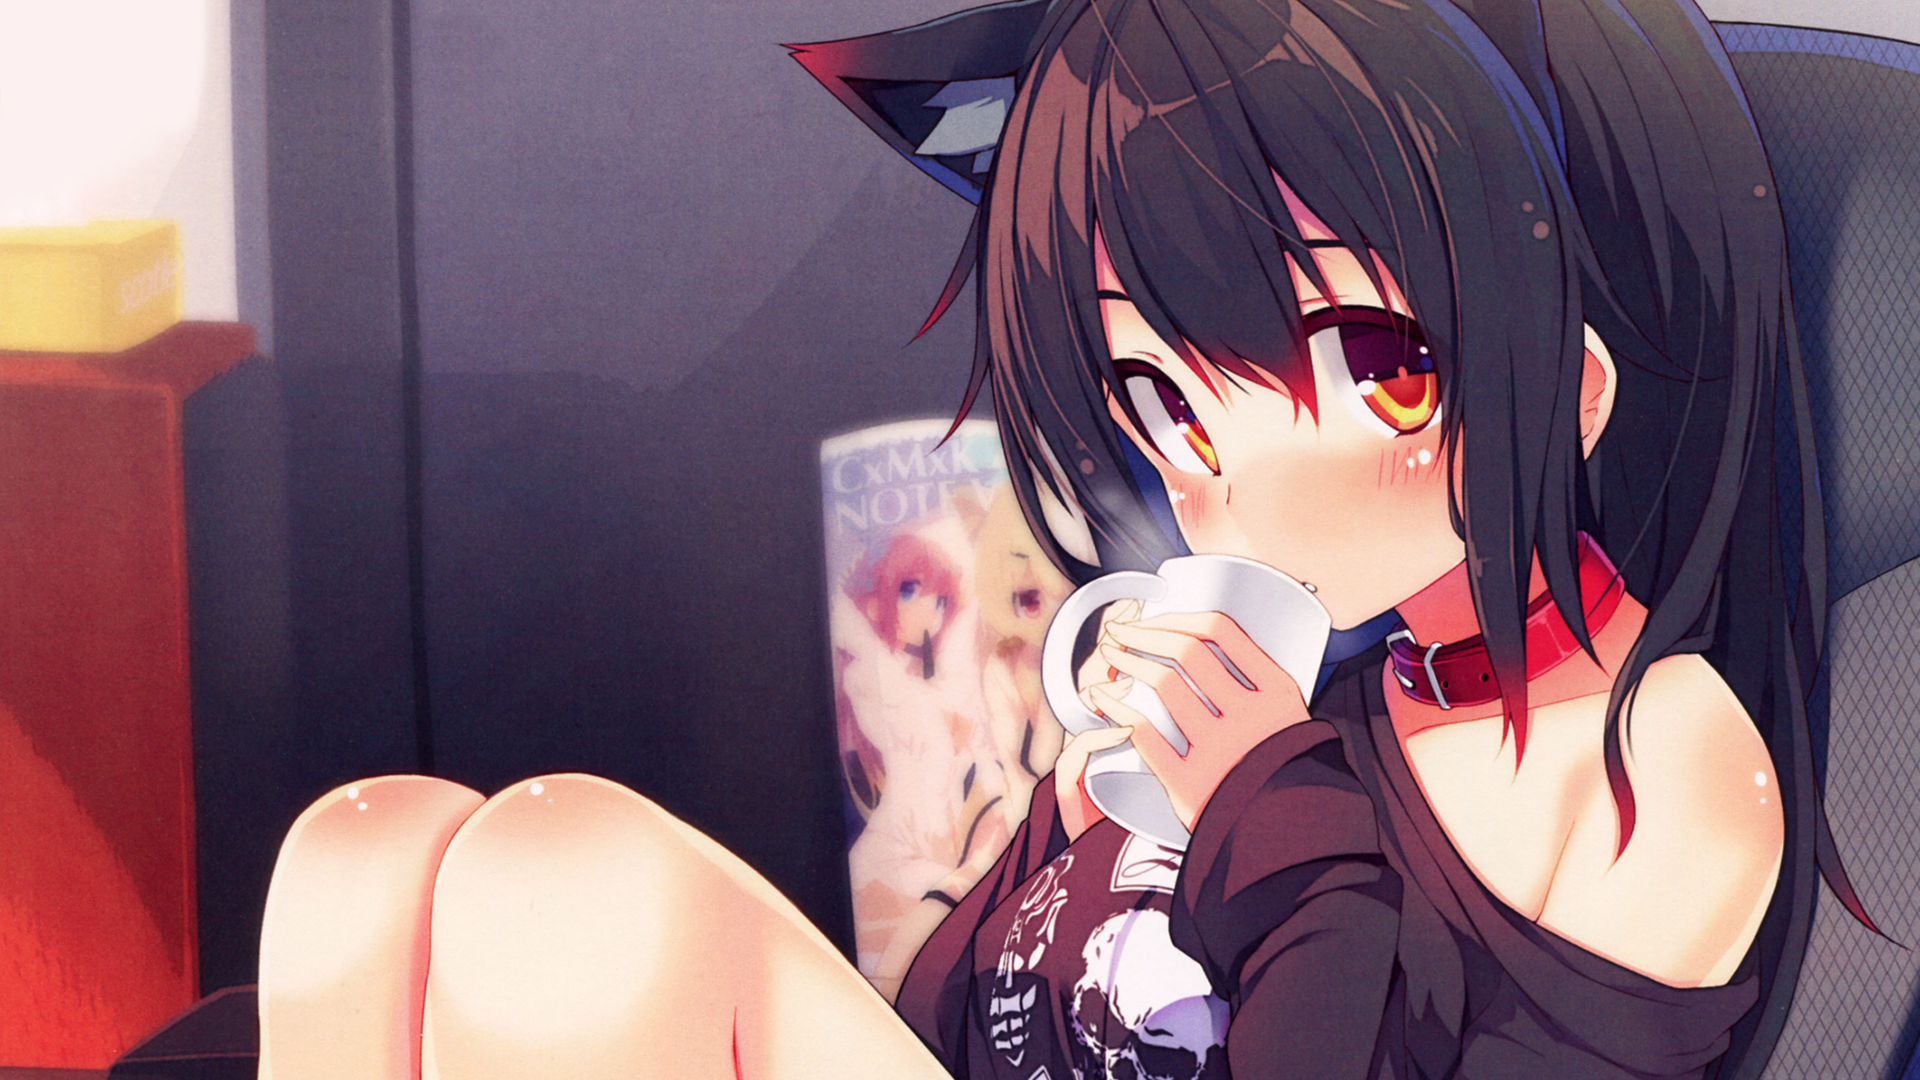 Anime 1920x1080 cat girl anime girls cup animal ears dark hair anime Chiri collar drinking looking at viewer knees knees together